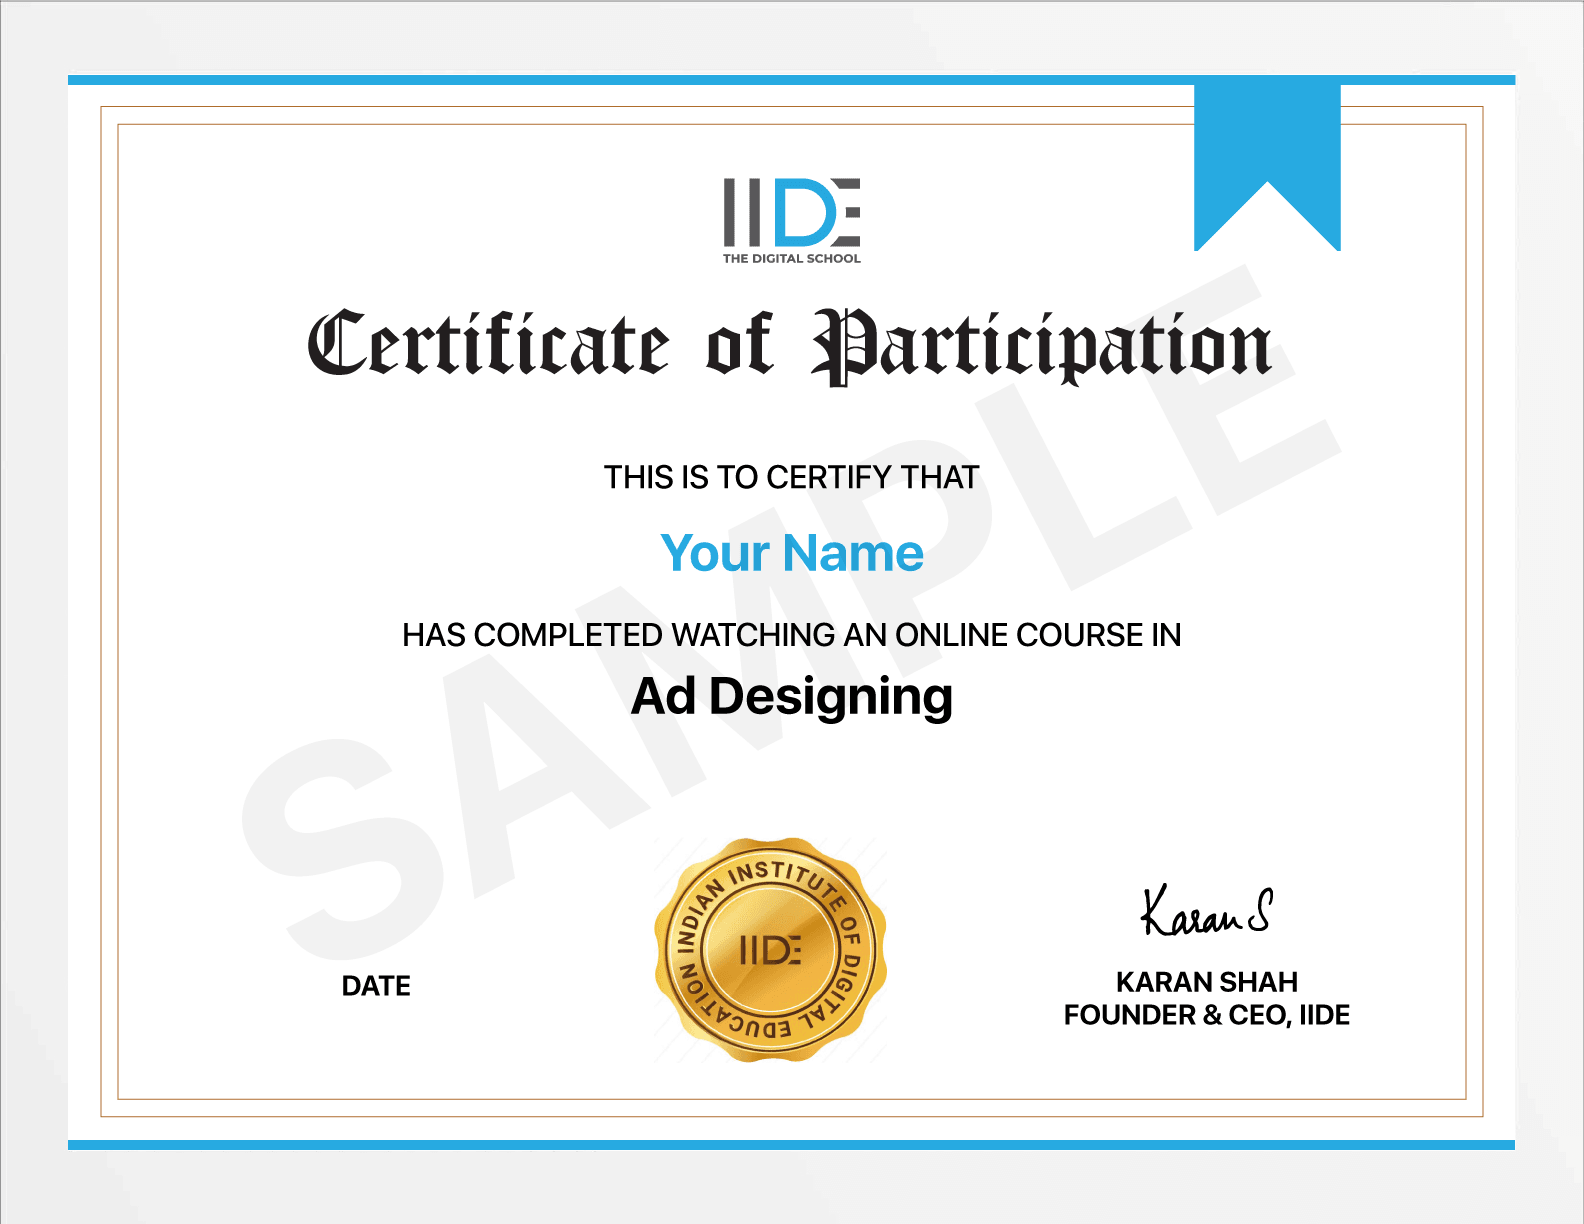 Ad Designing Course - Certificate